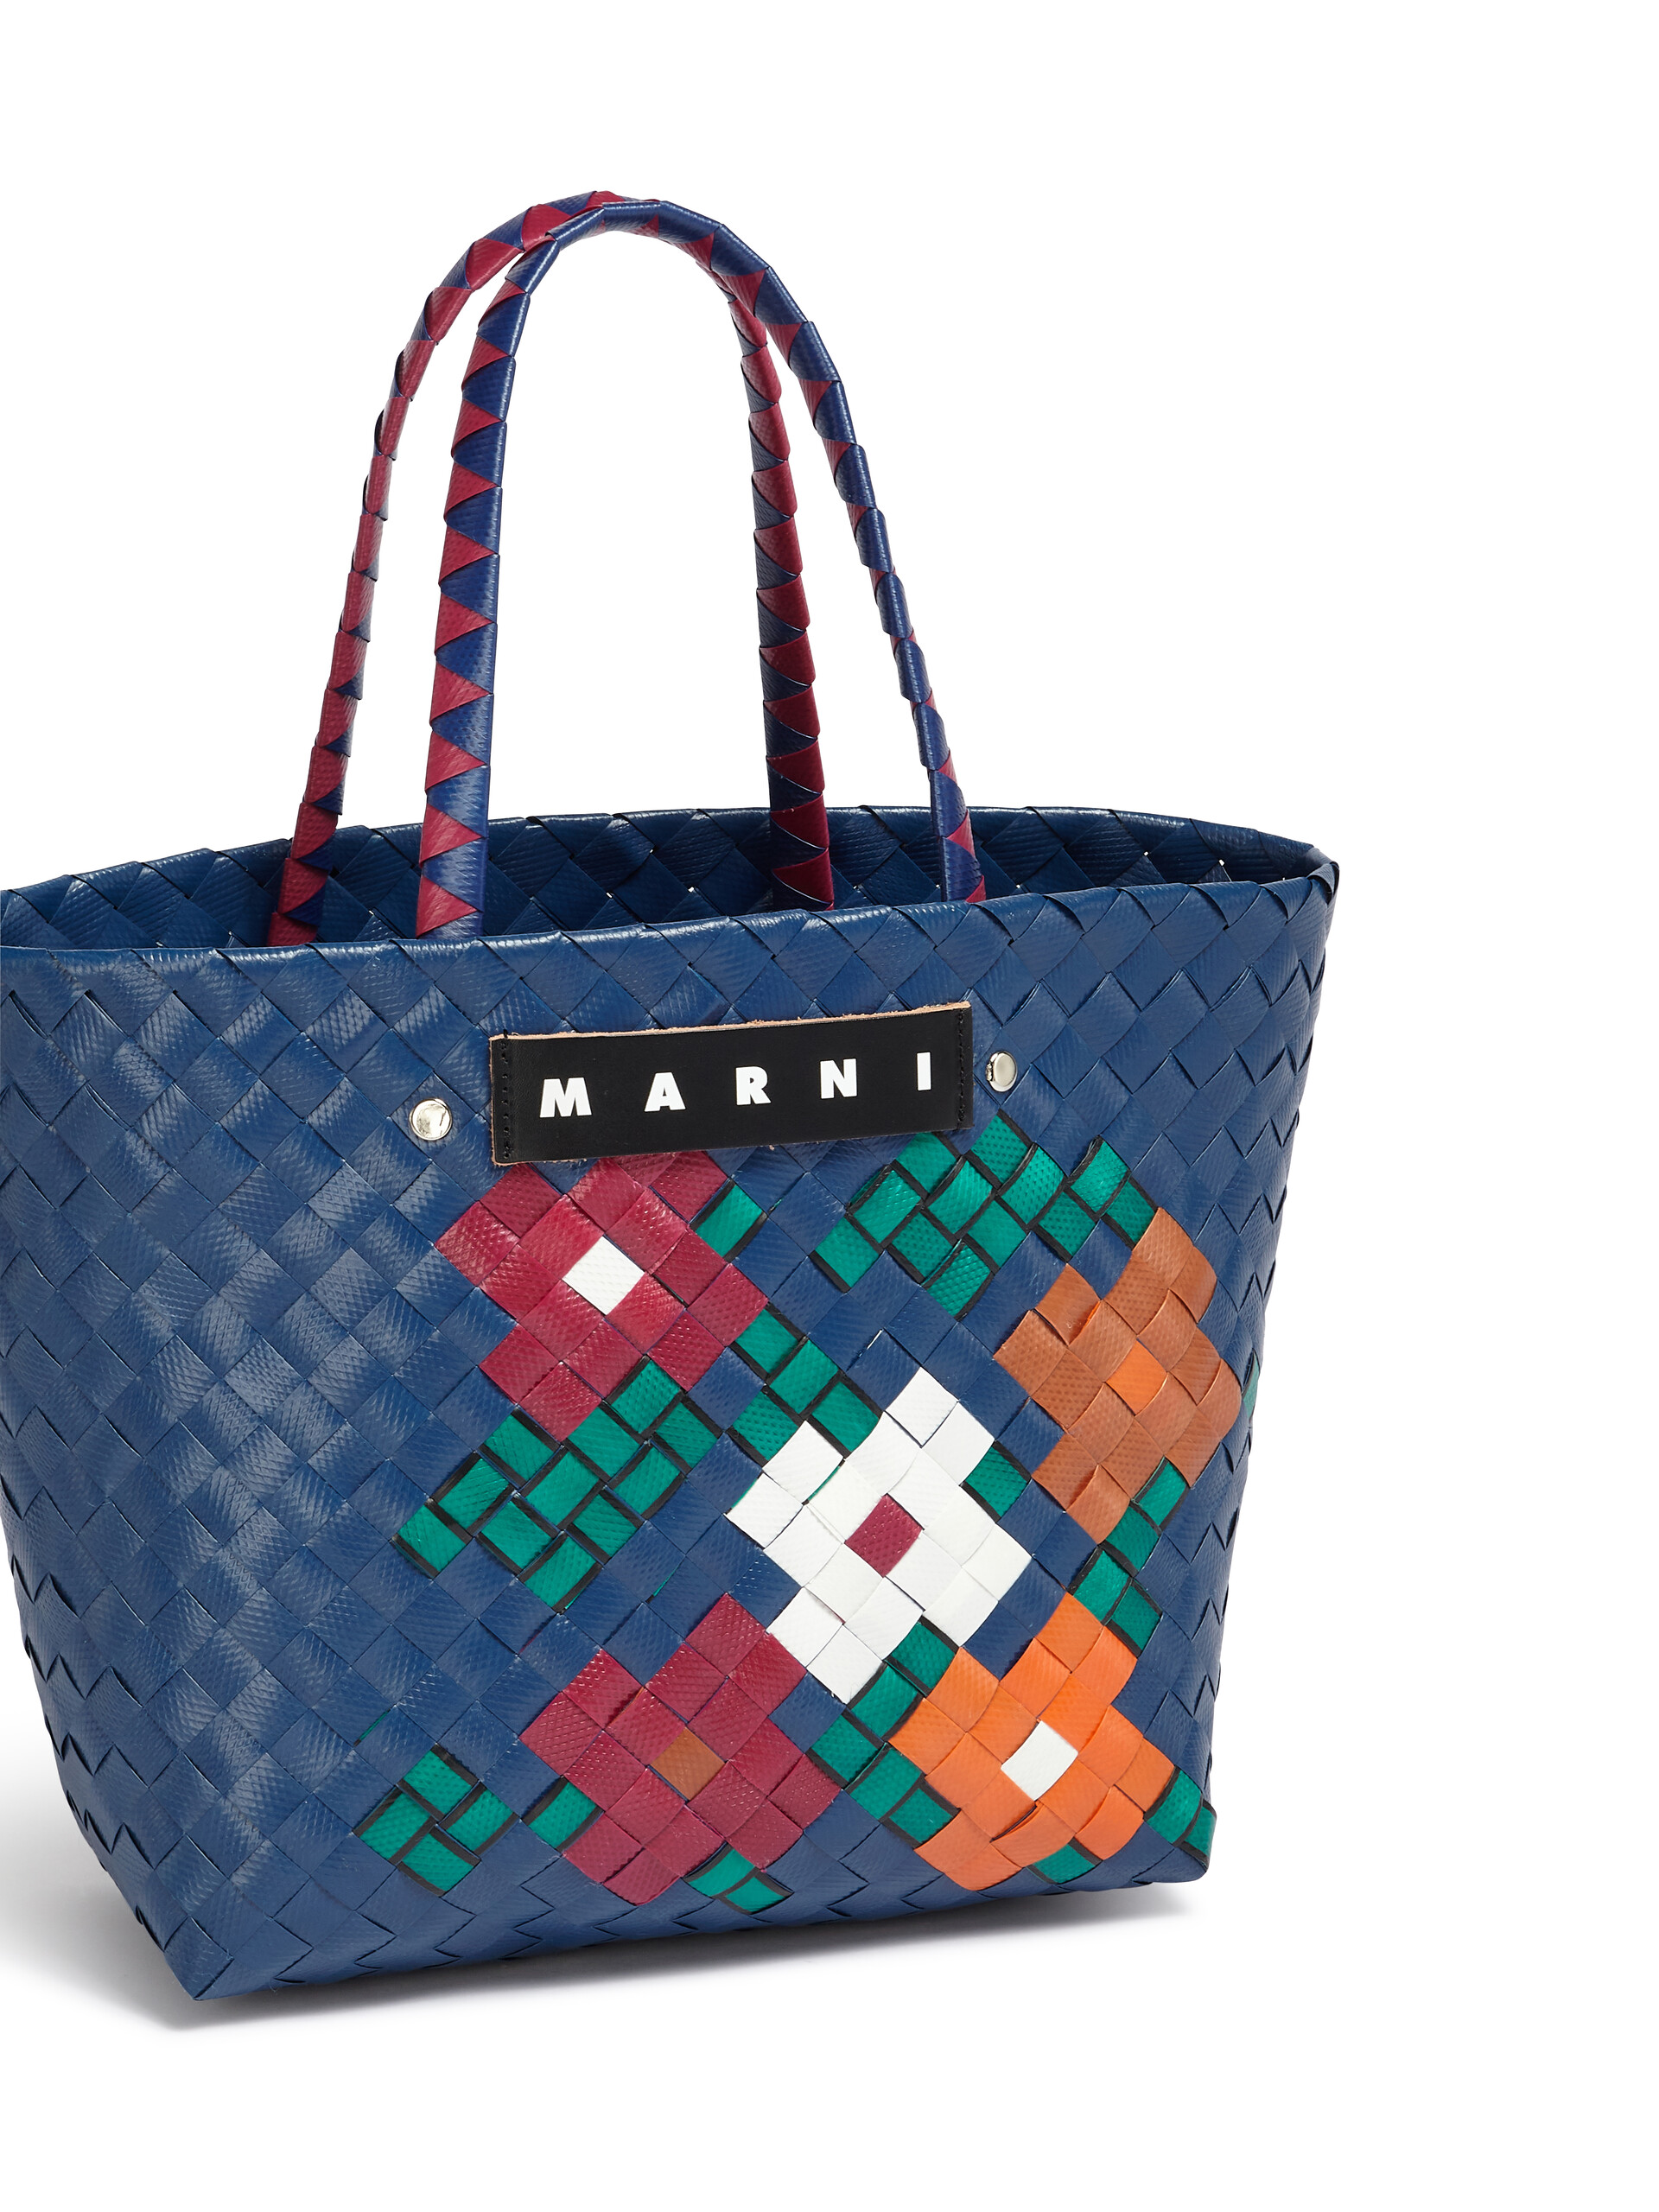 MARNI MARKET small bag in blue flower motif | Marni